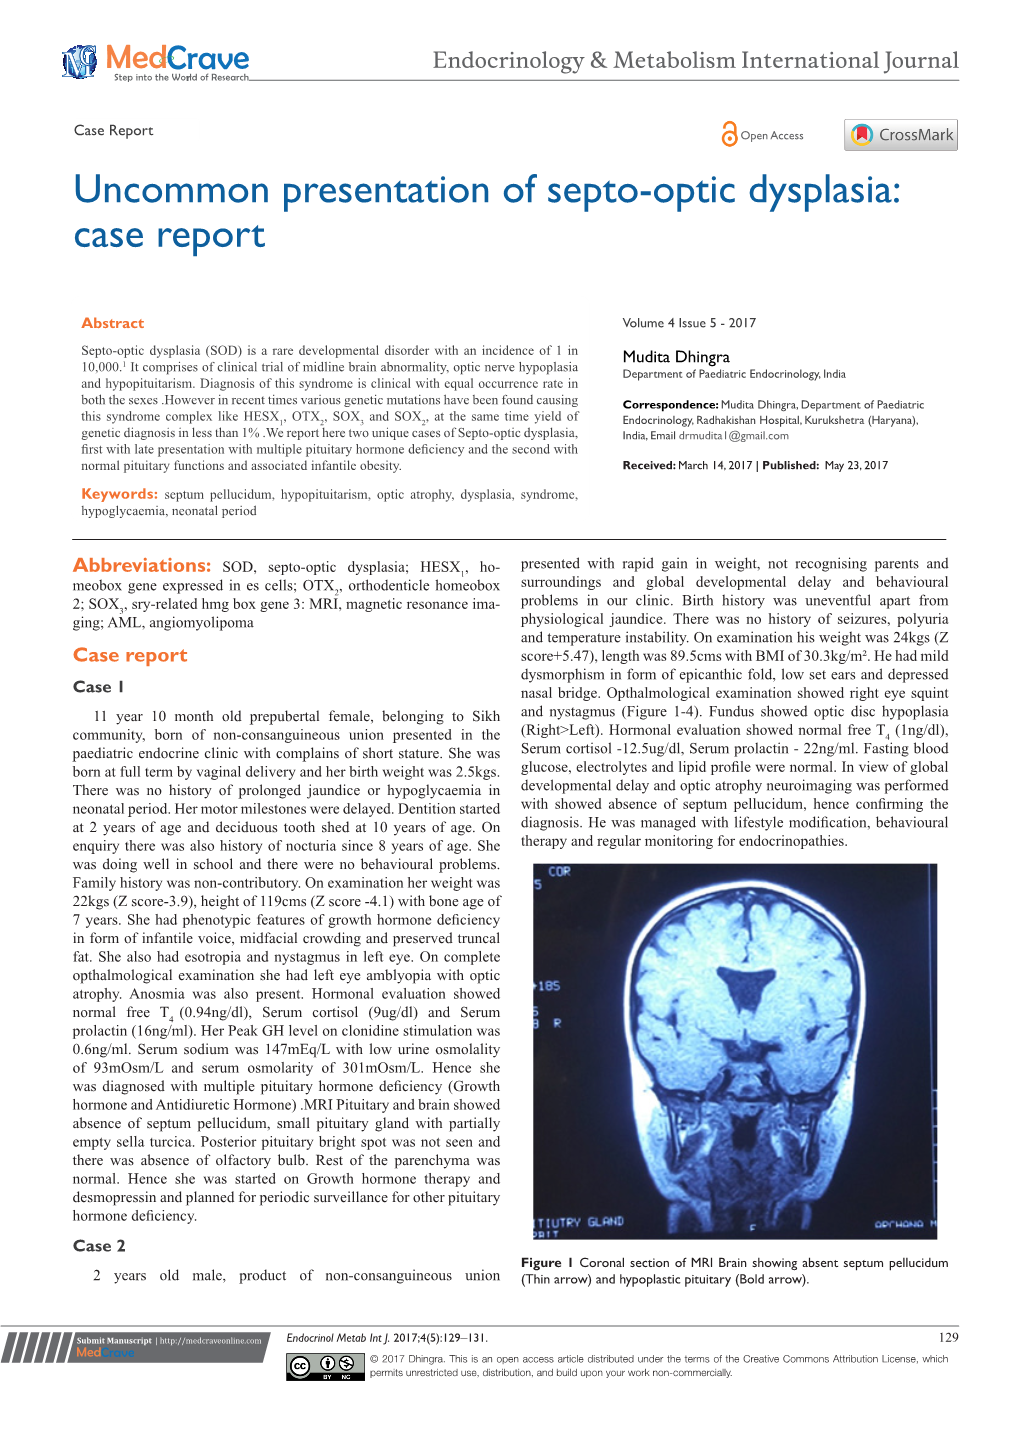 Uncommon Presentation of Septo-Optic Dysplasia: Case Report